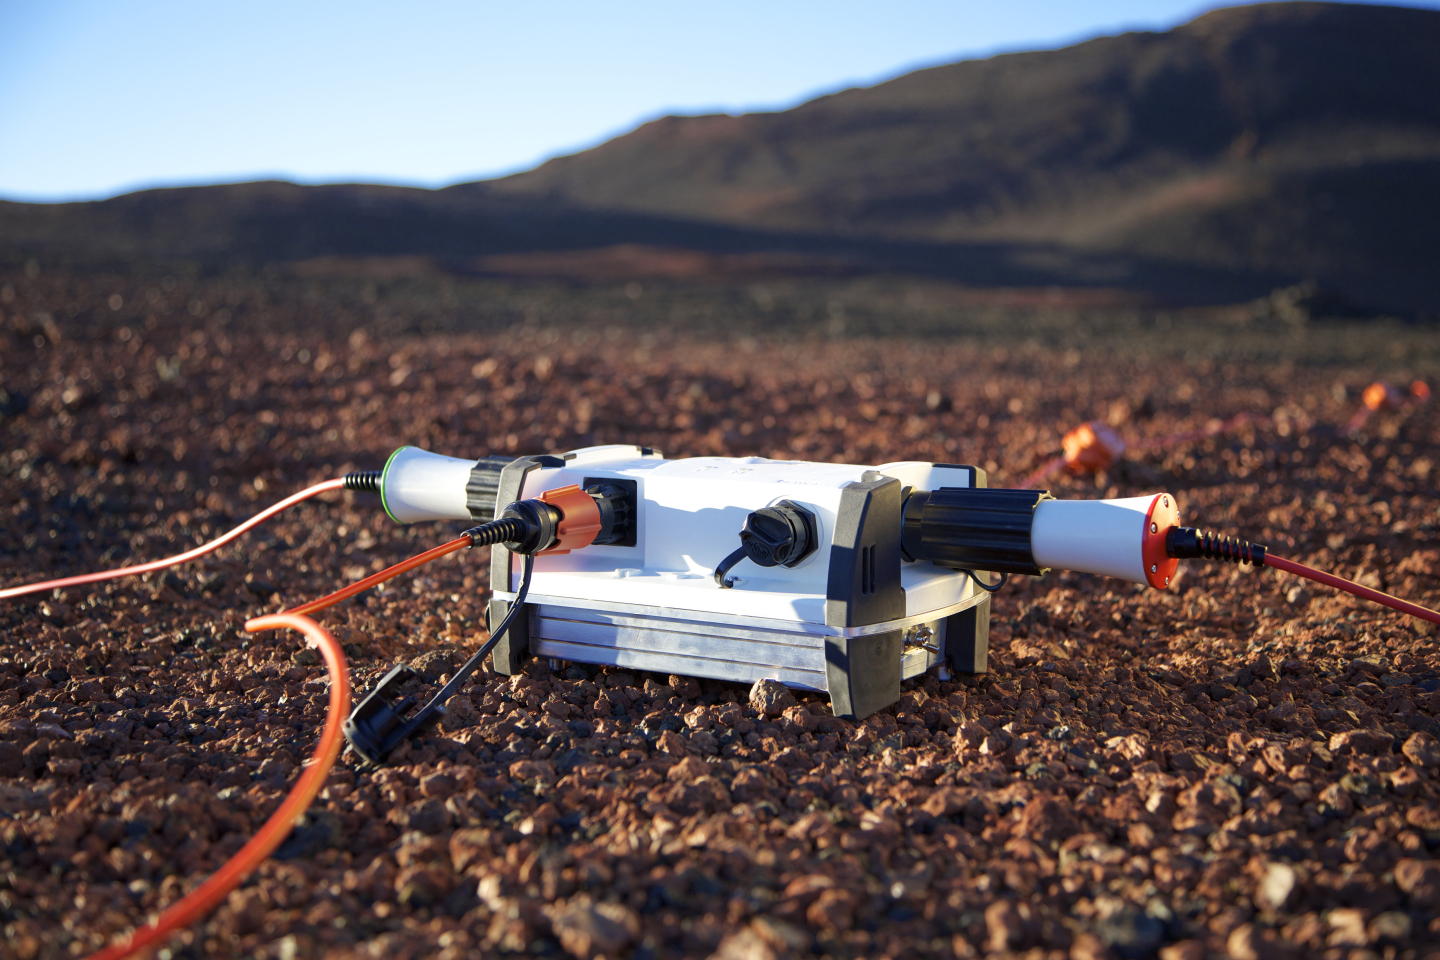 508 XT product on land desert environment seismic mesurement